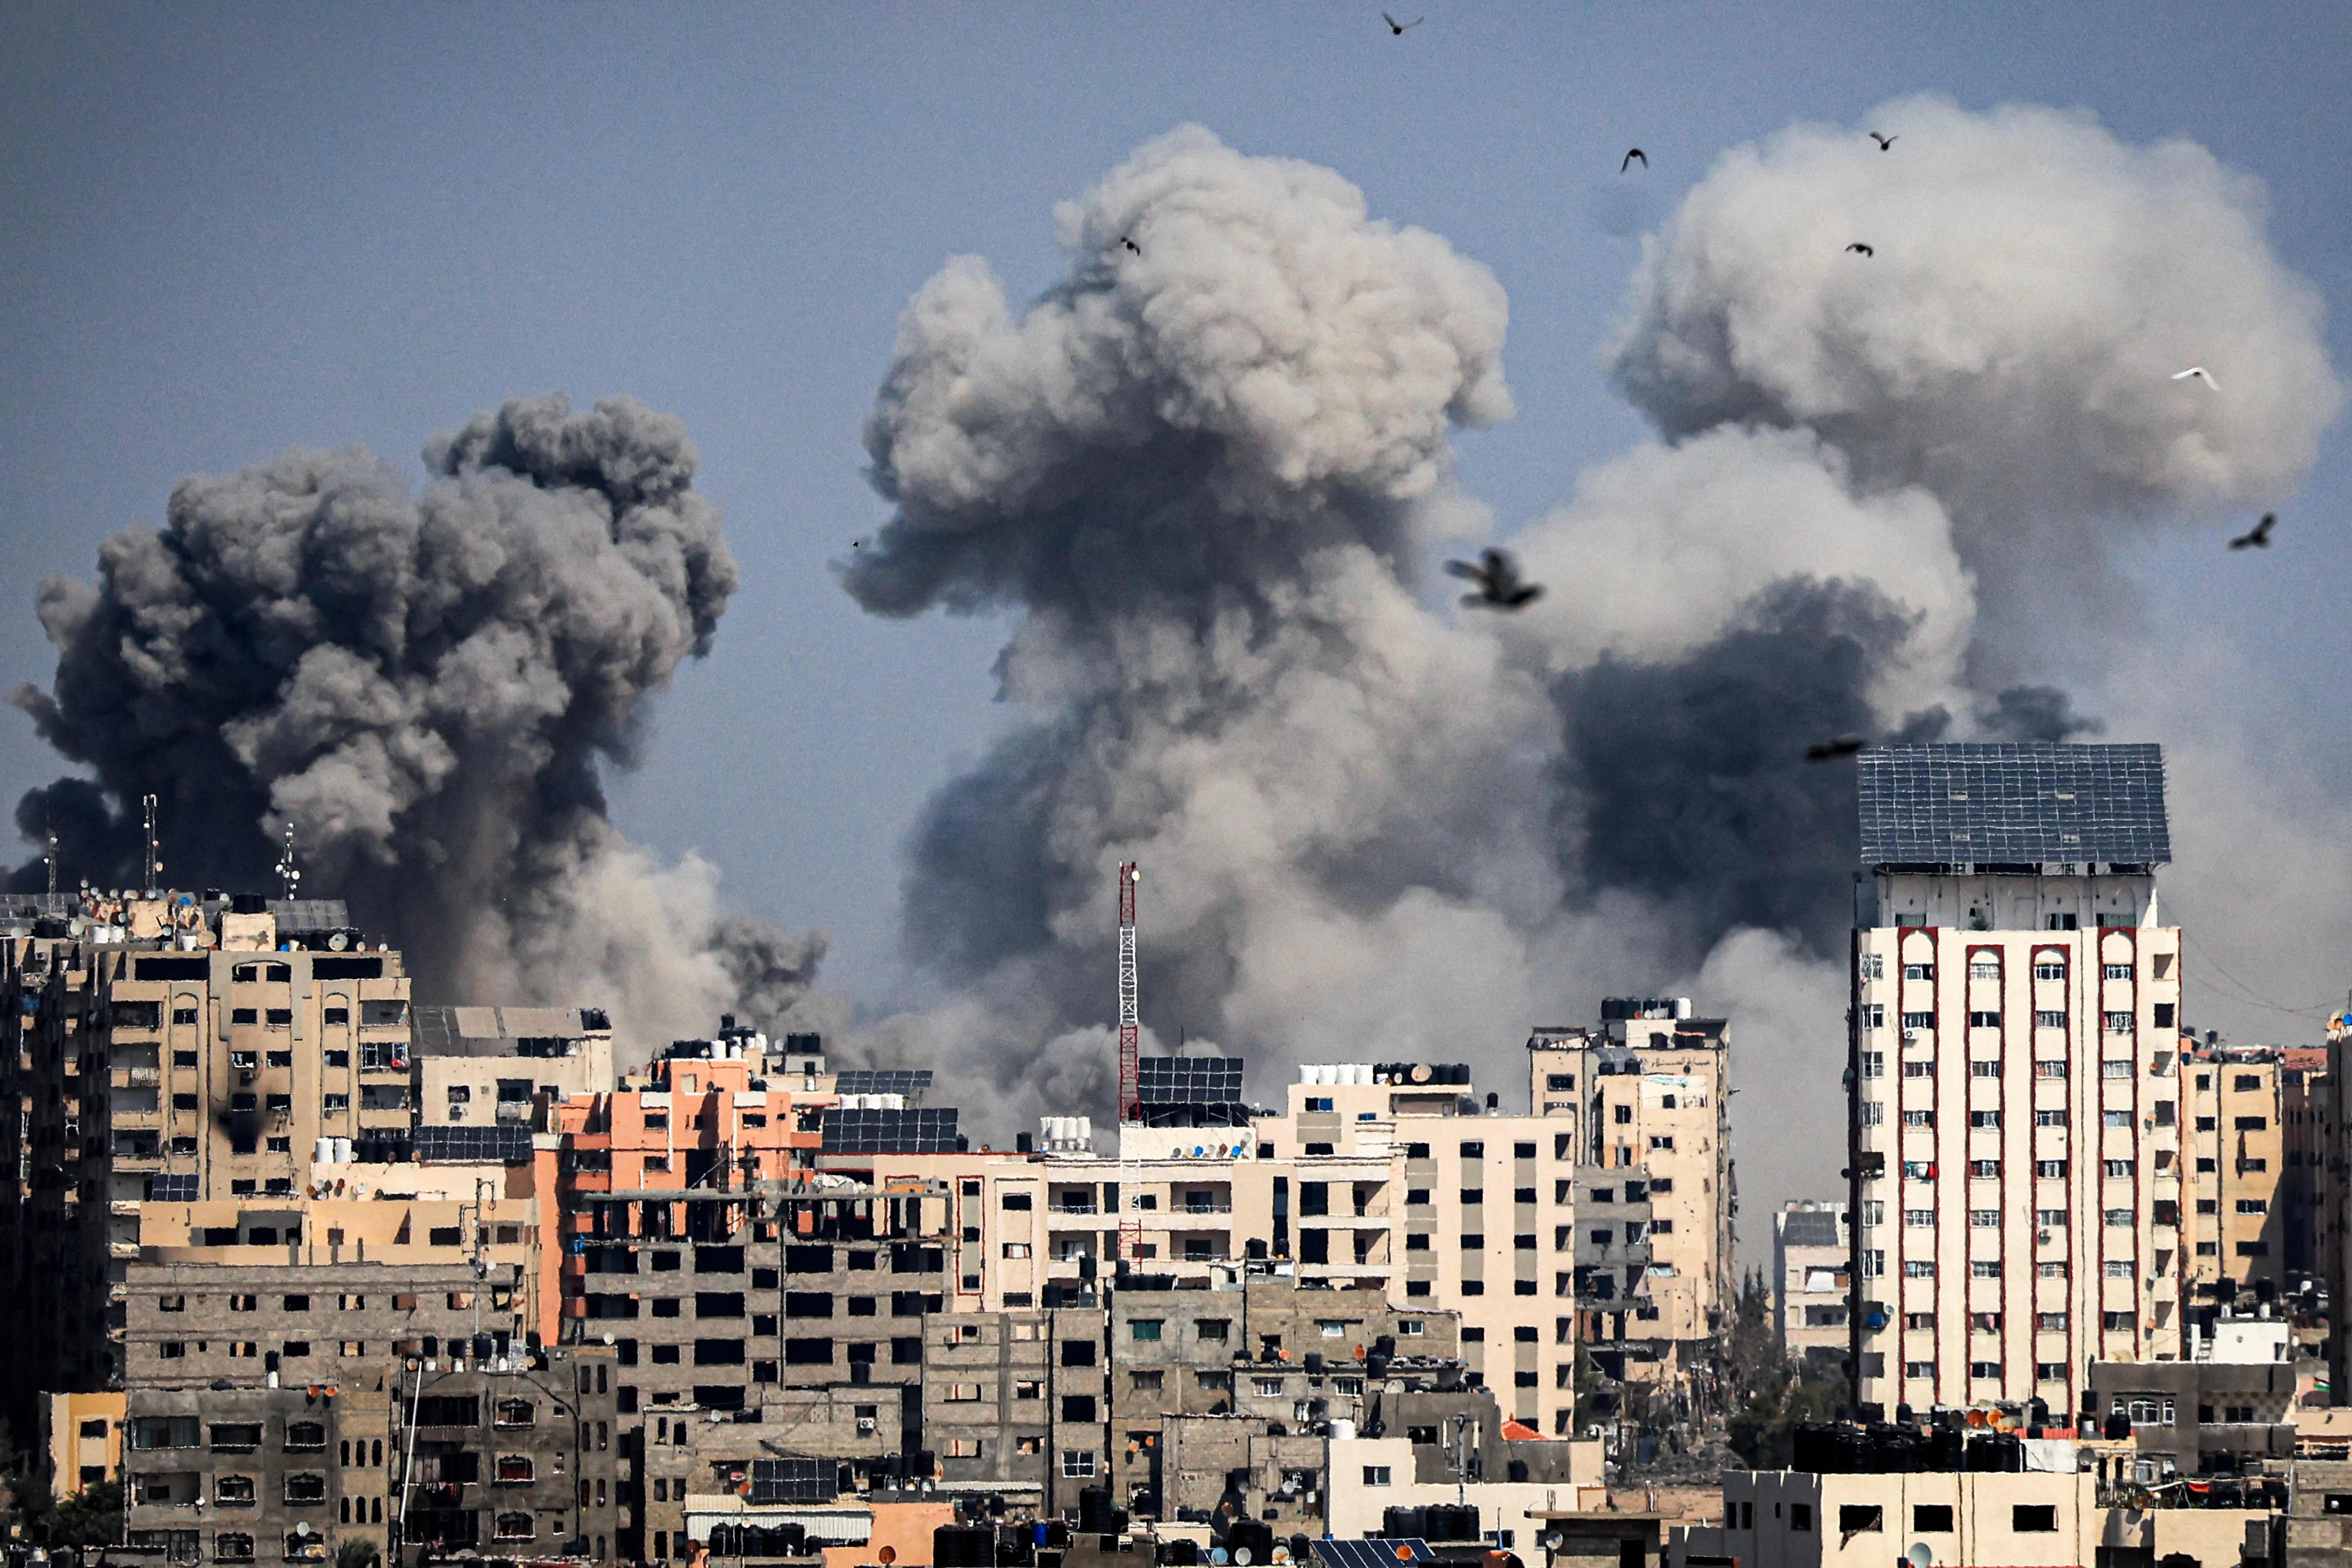 The Israel-Hamas war has had an impact on the UK’s Jewish and Muslim communities